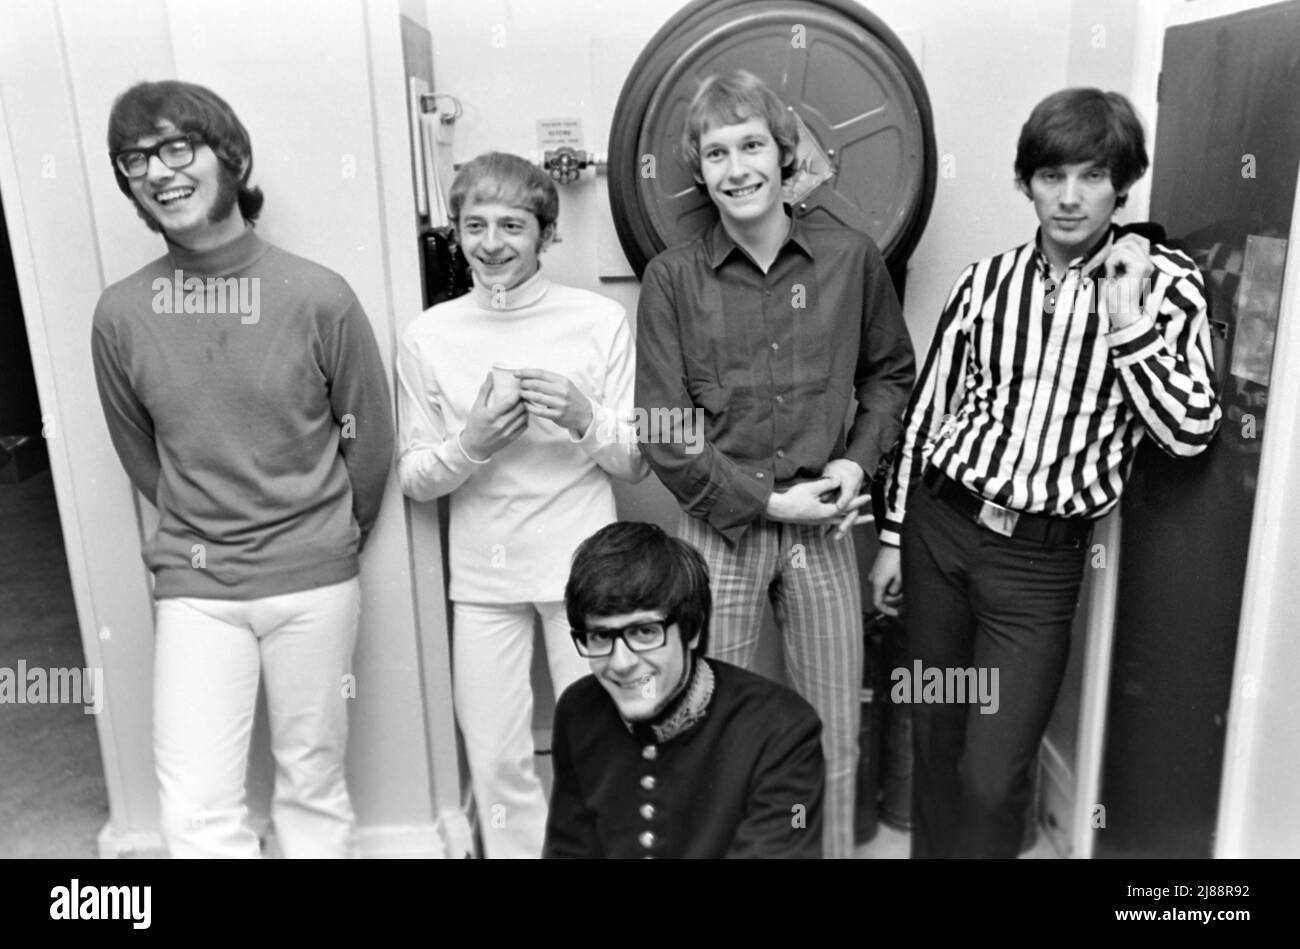 MANFRED MANN UK pop group nel mese di agosto 1966... Da sinistra: Tom McGuinness, Mike Hugg, Mike D'Abo, Claus Voormann e Manfred Mann inginocchiati. Foto: Tony Gale Foto Stock